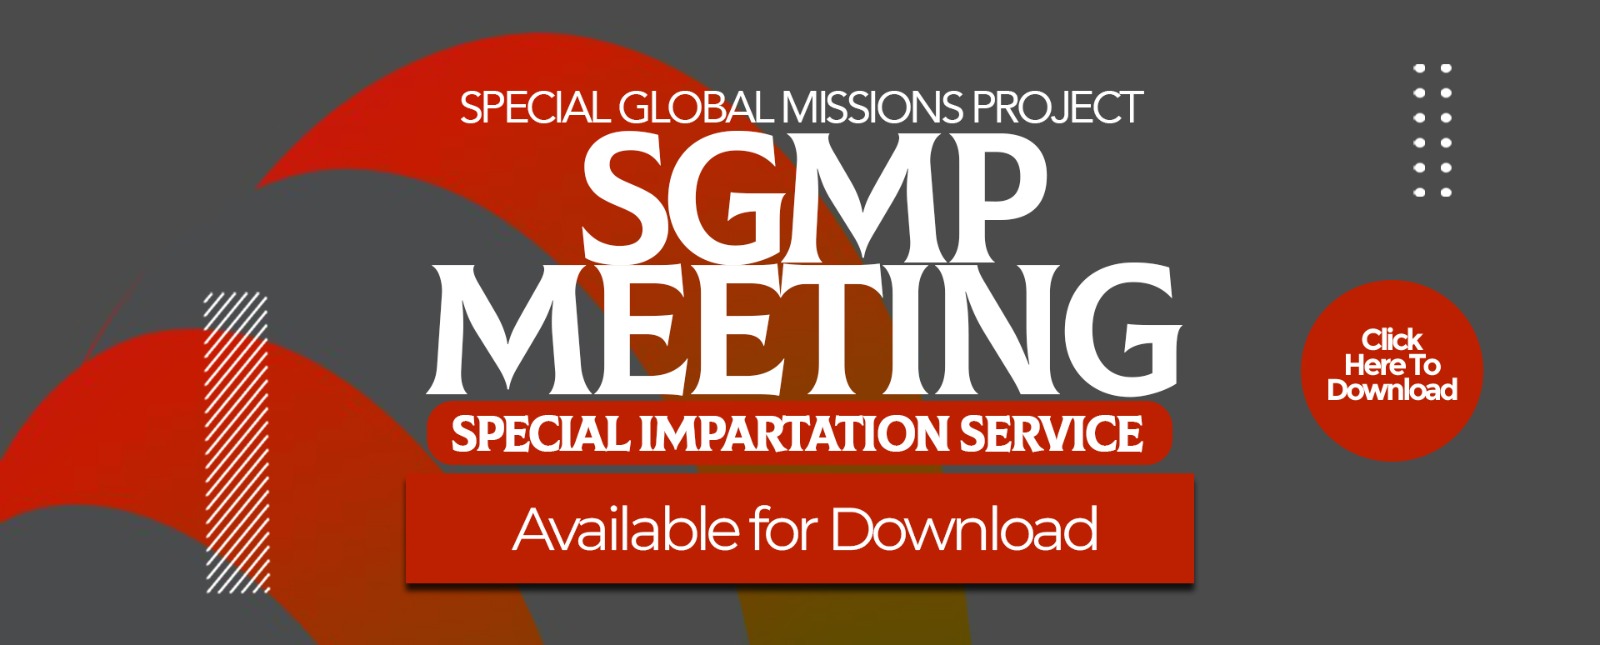 download-sgmp-message